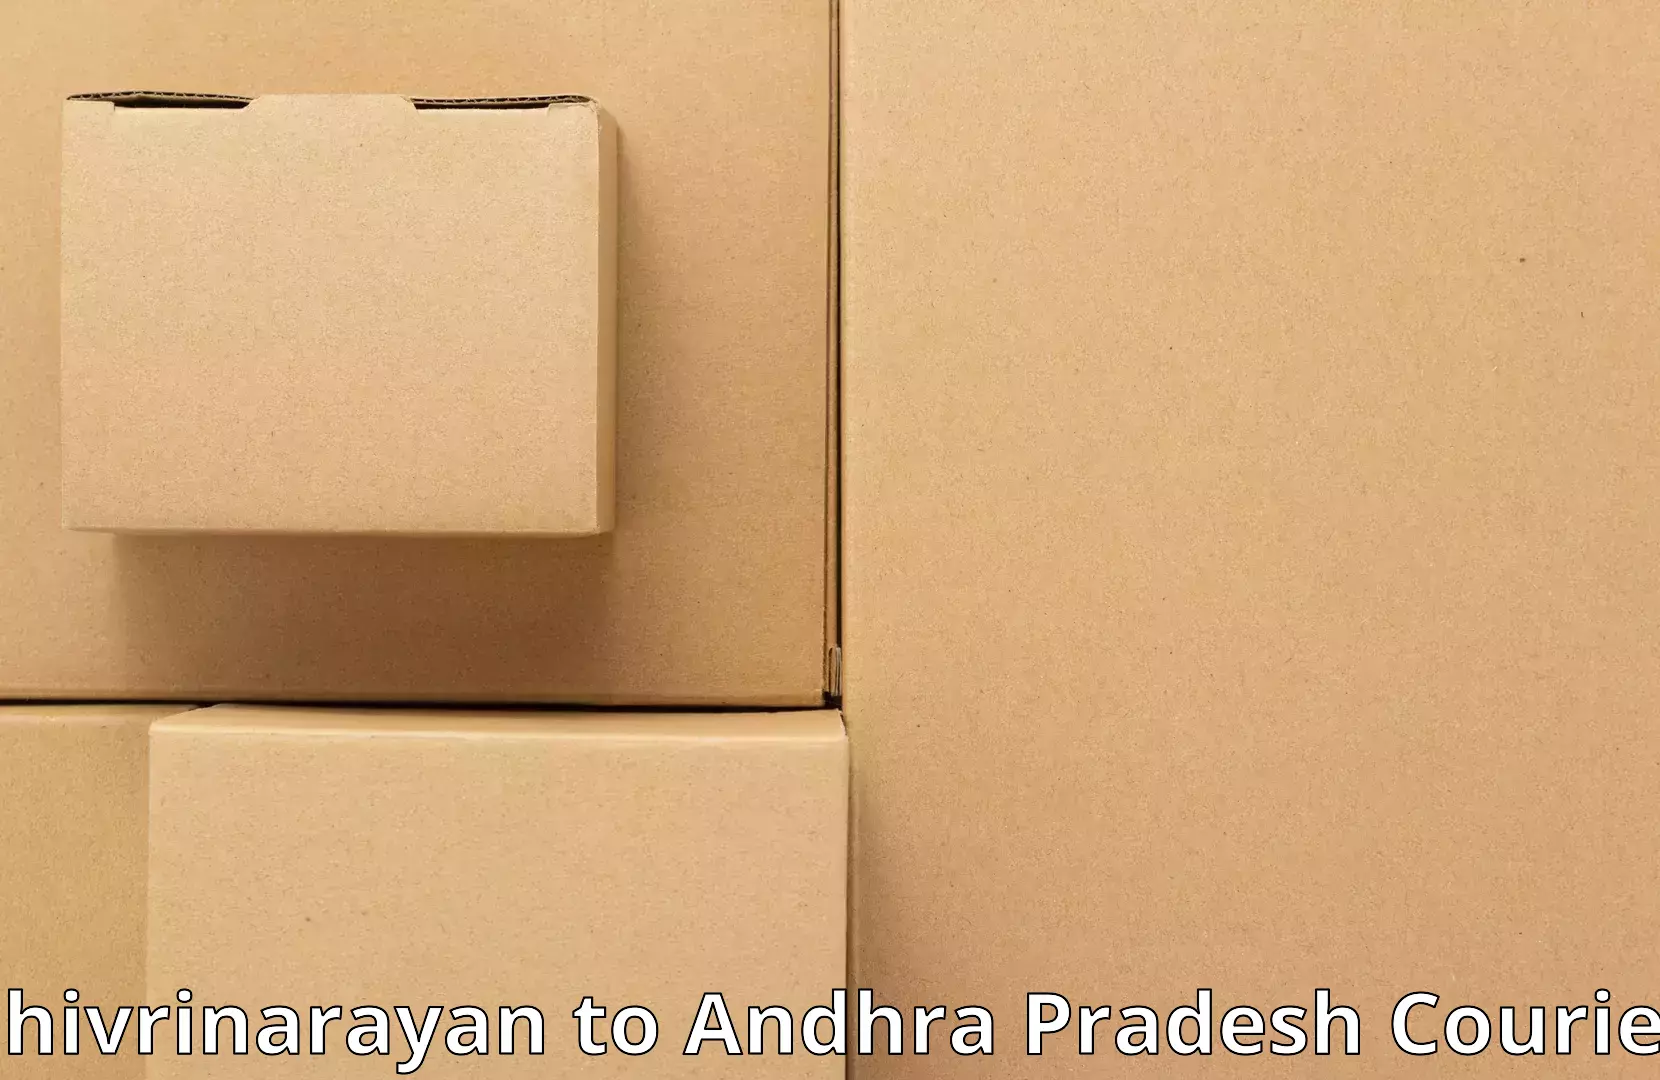 Quality moving and storage Shivrinarayan to Gudur